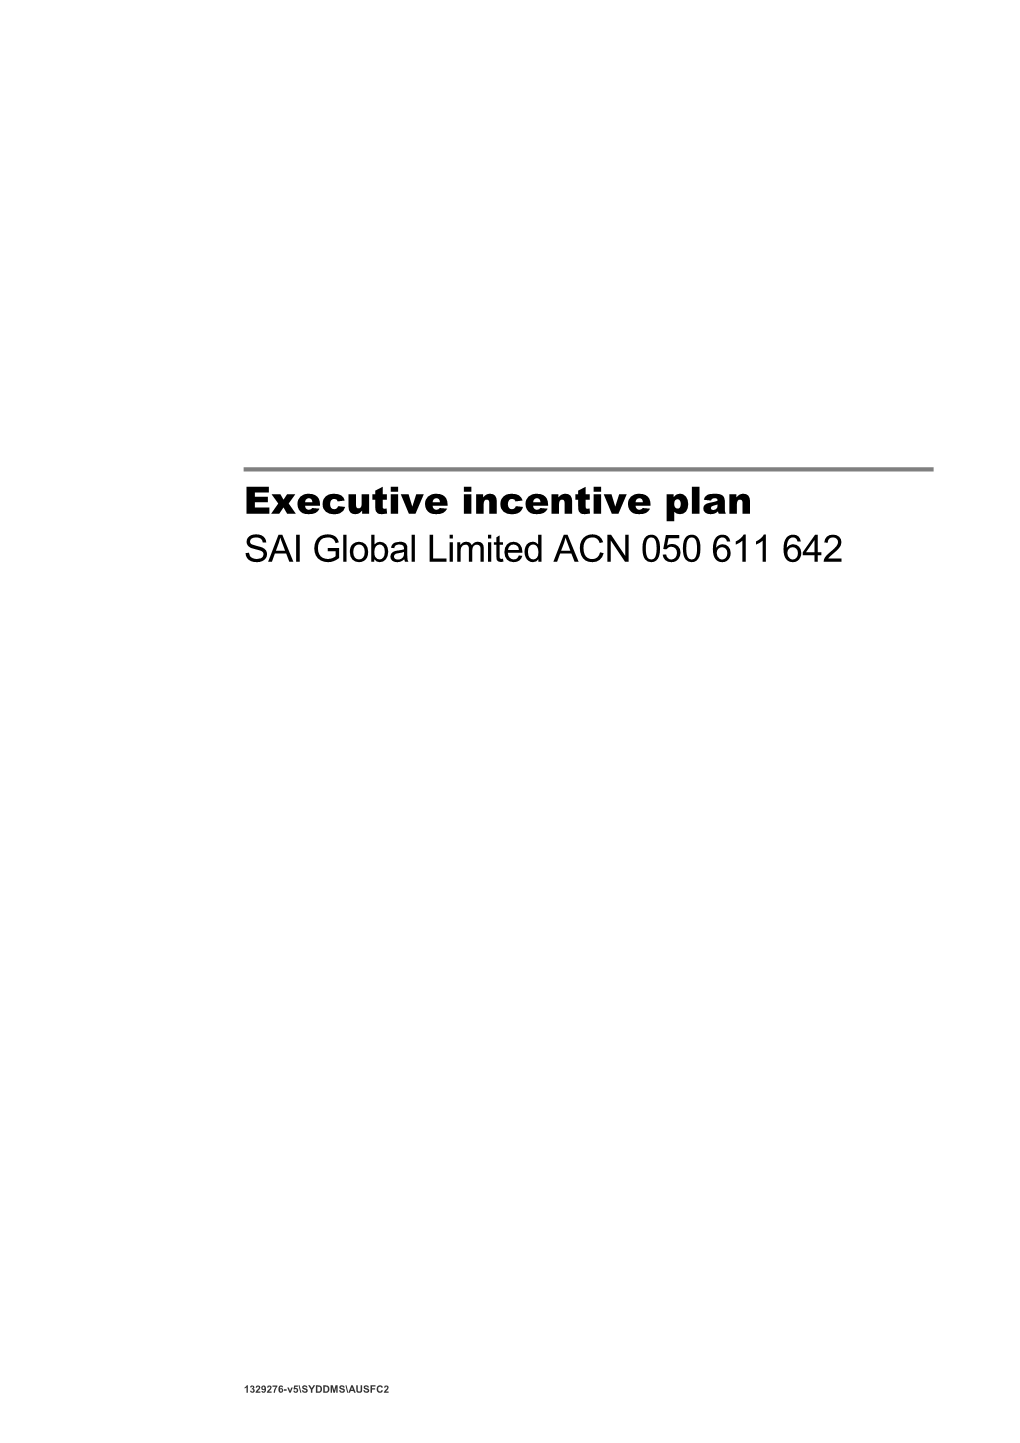 SAI Global Limited ACN 050 611 642